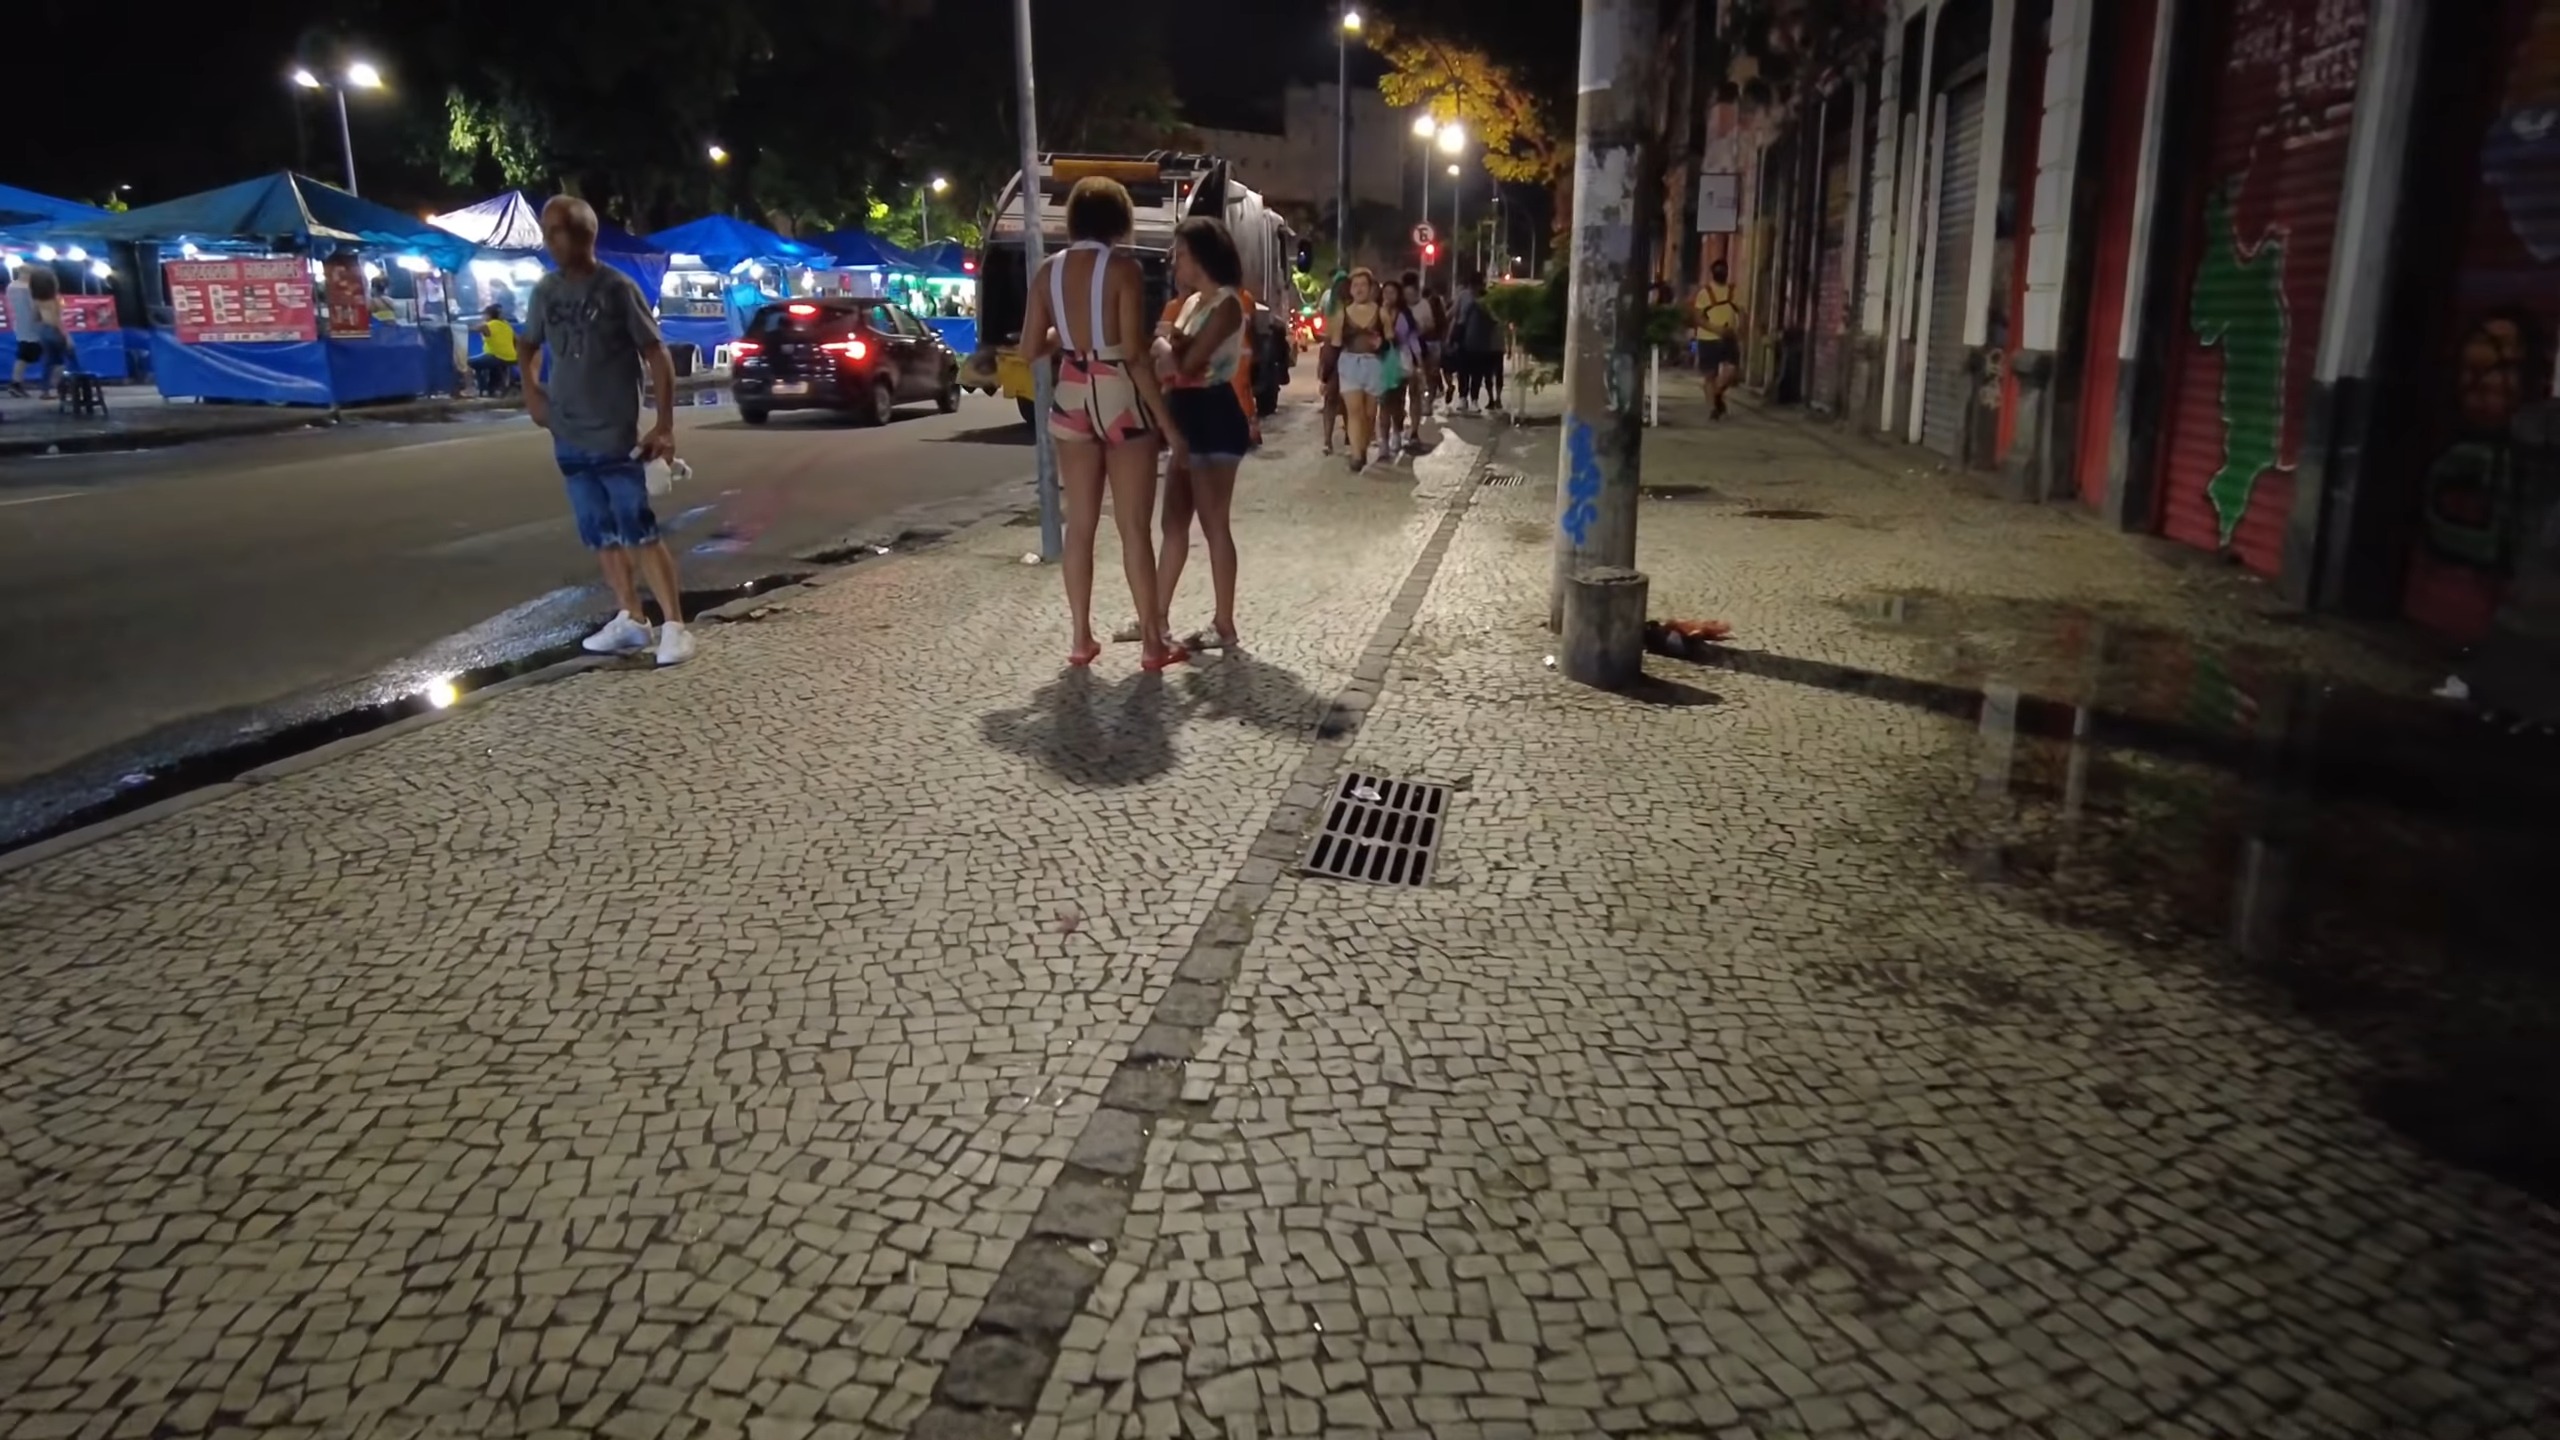 Brazil Prostitution Legalized